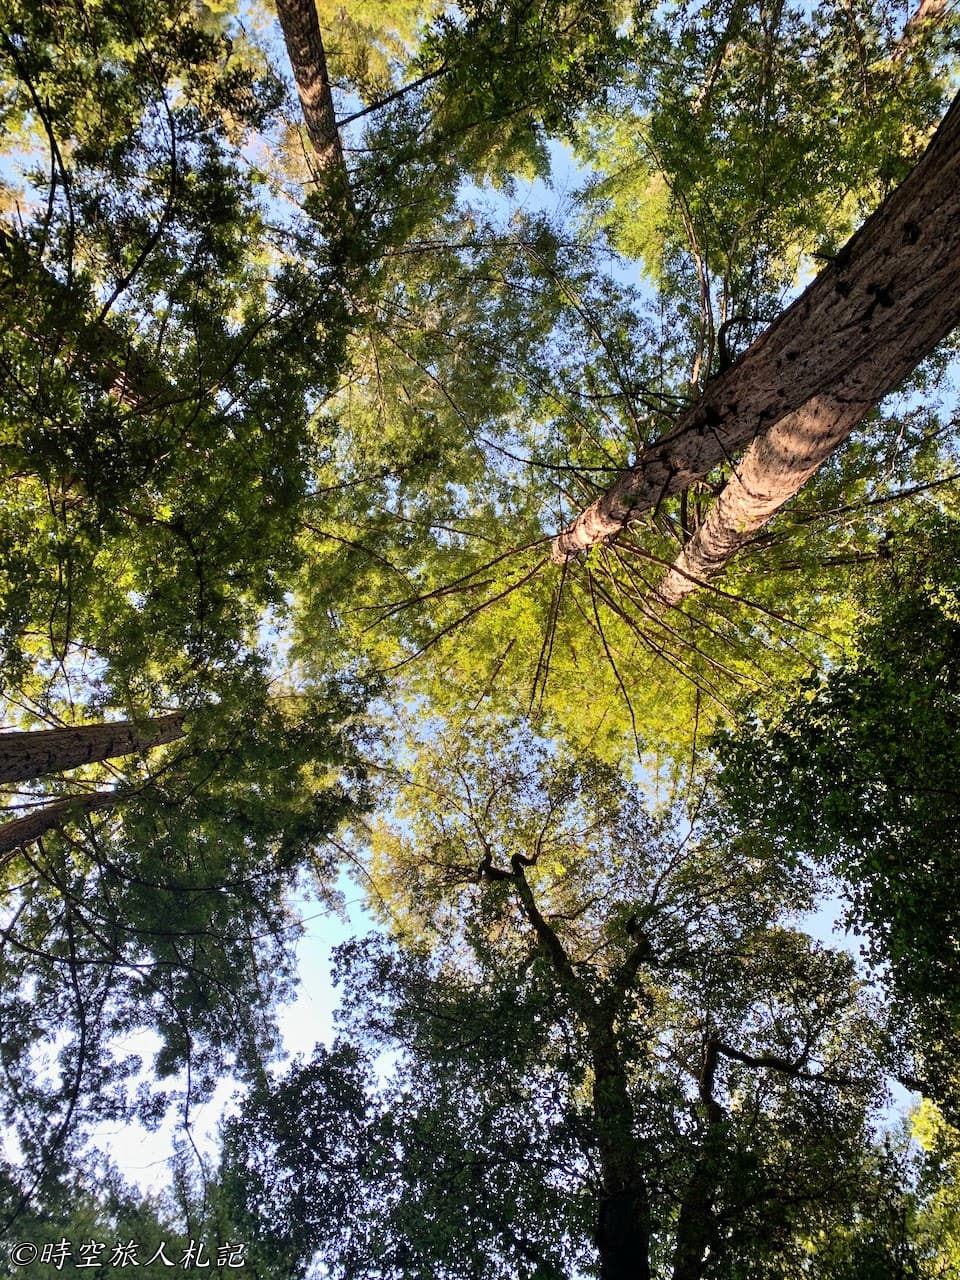 Portola redwood state park 7